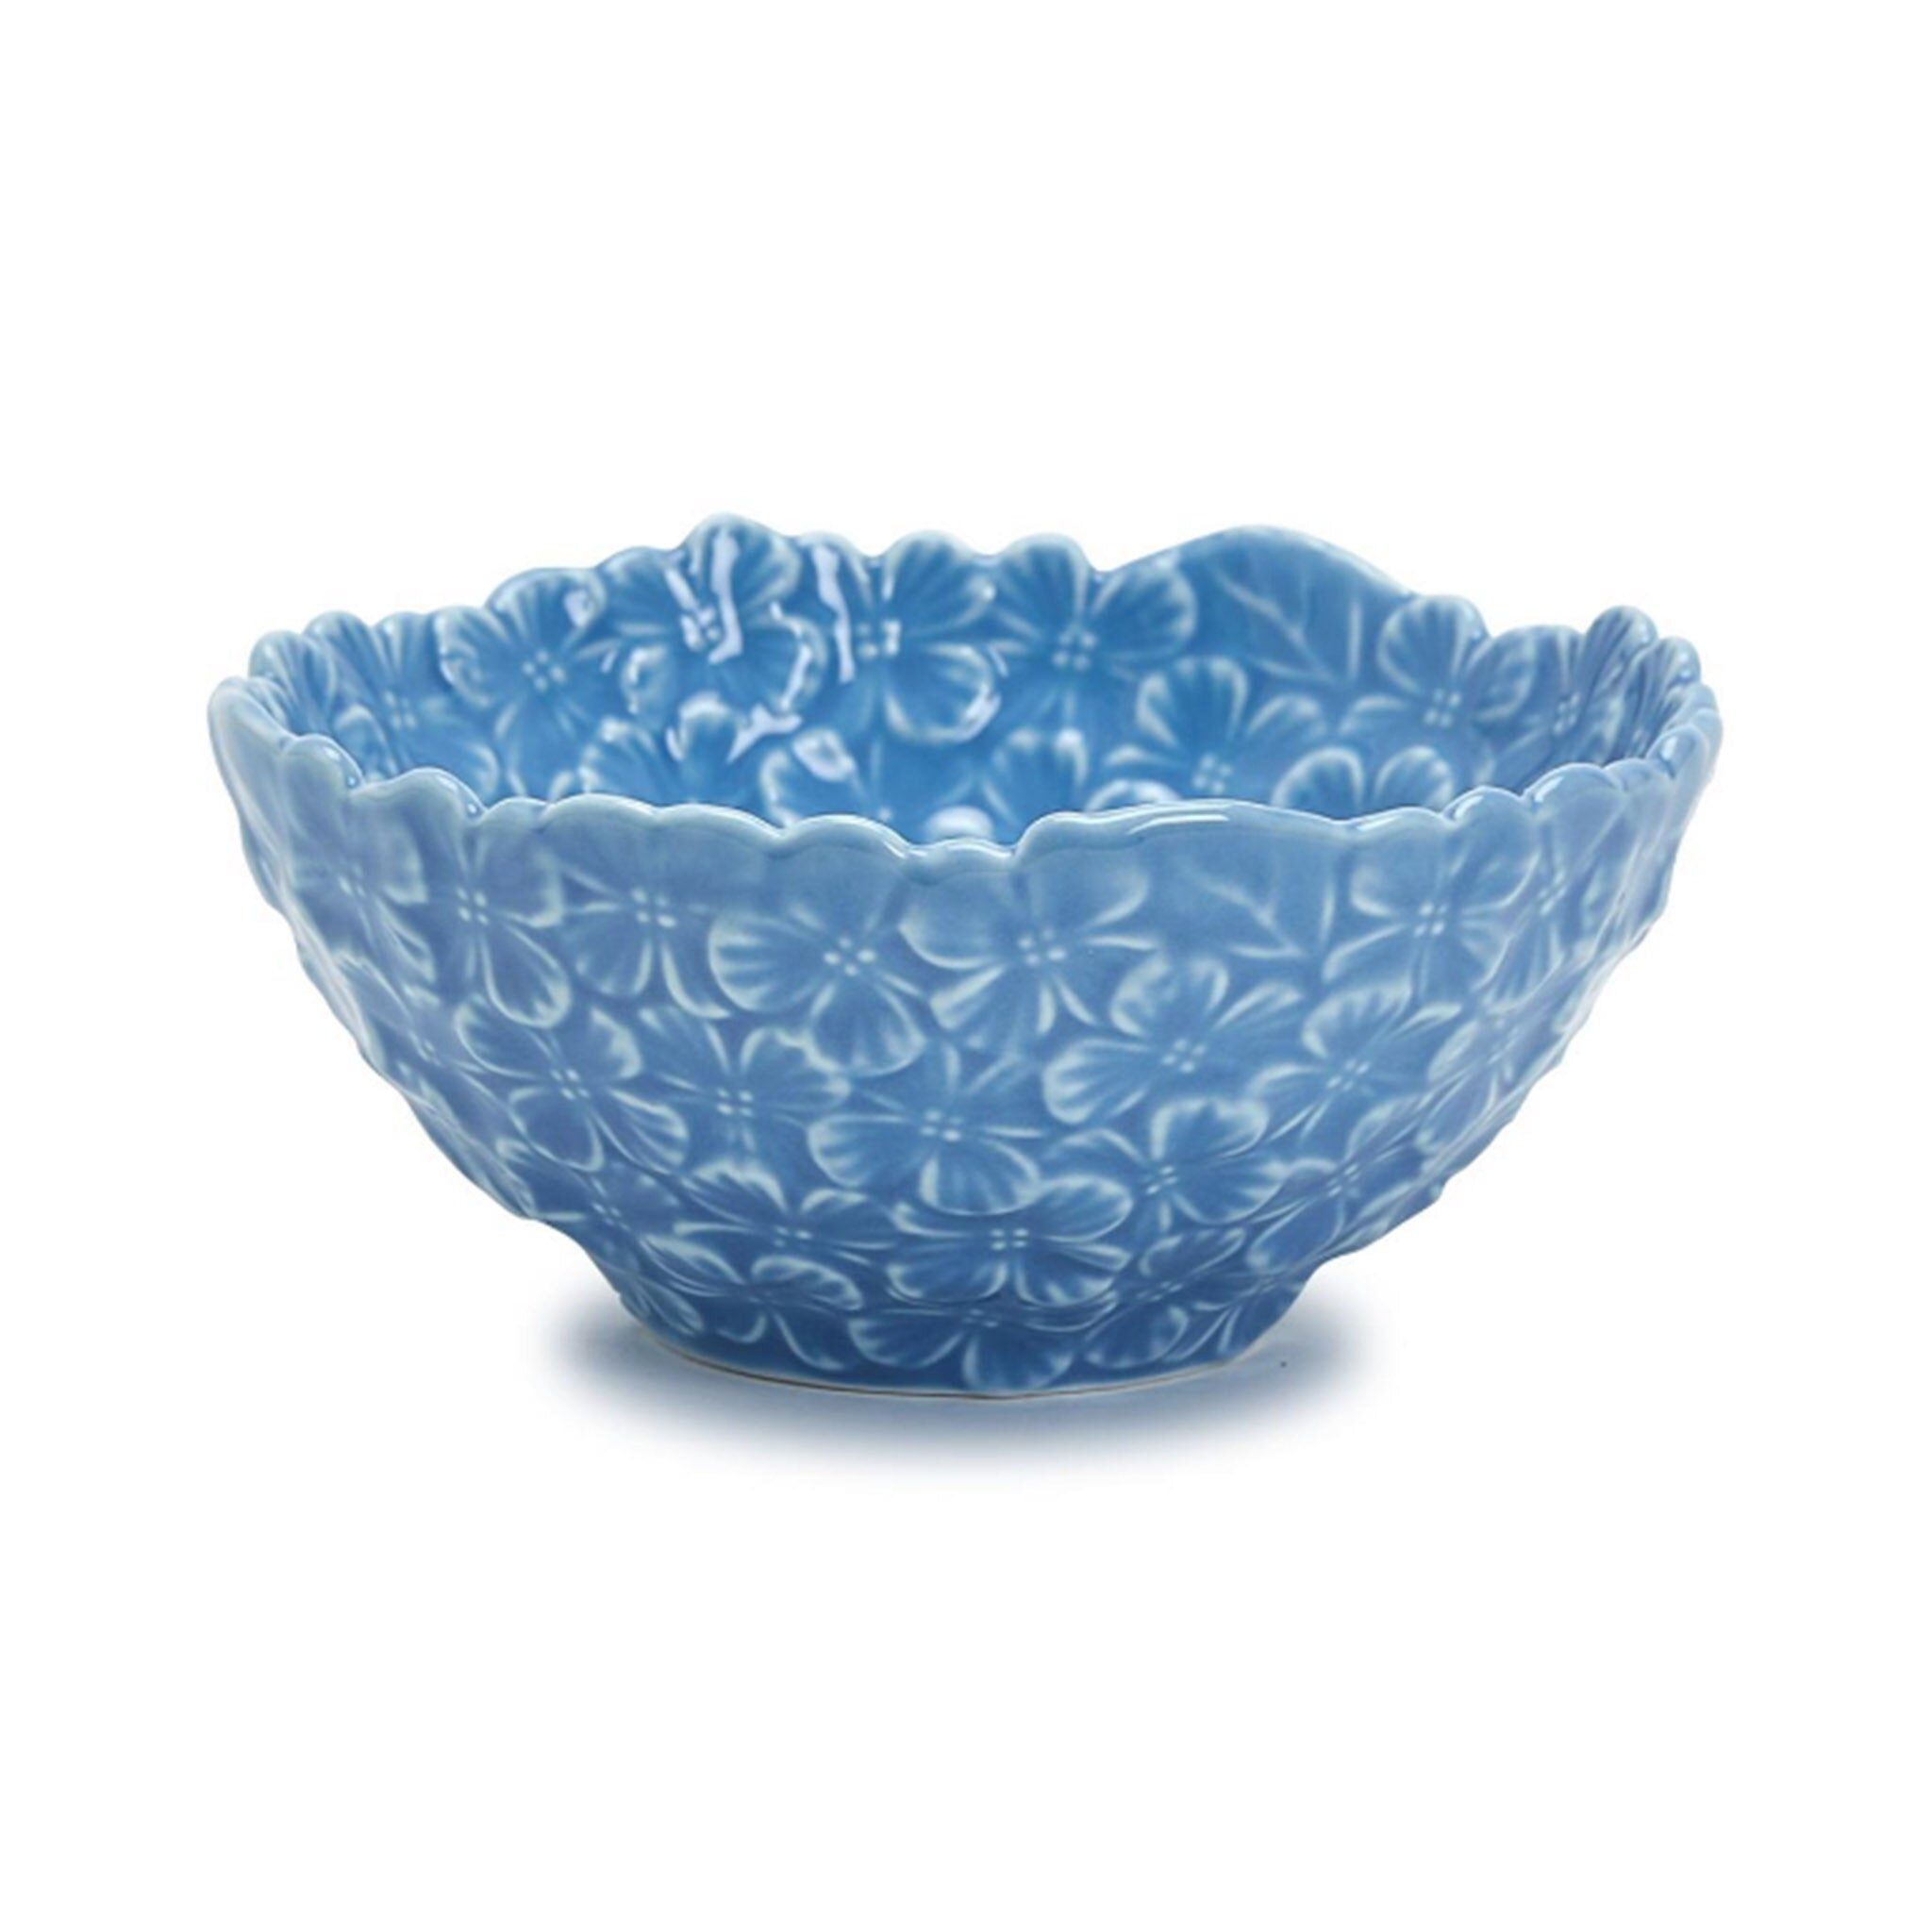 twos-company-54260-blue-hydrangea-tidbit-bowl